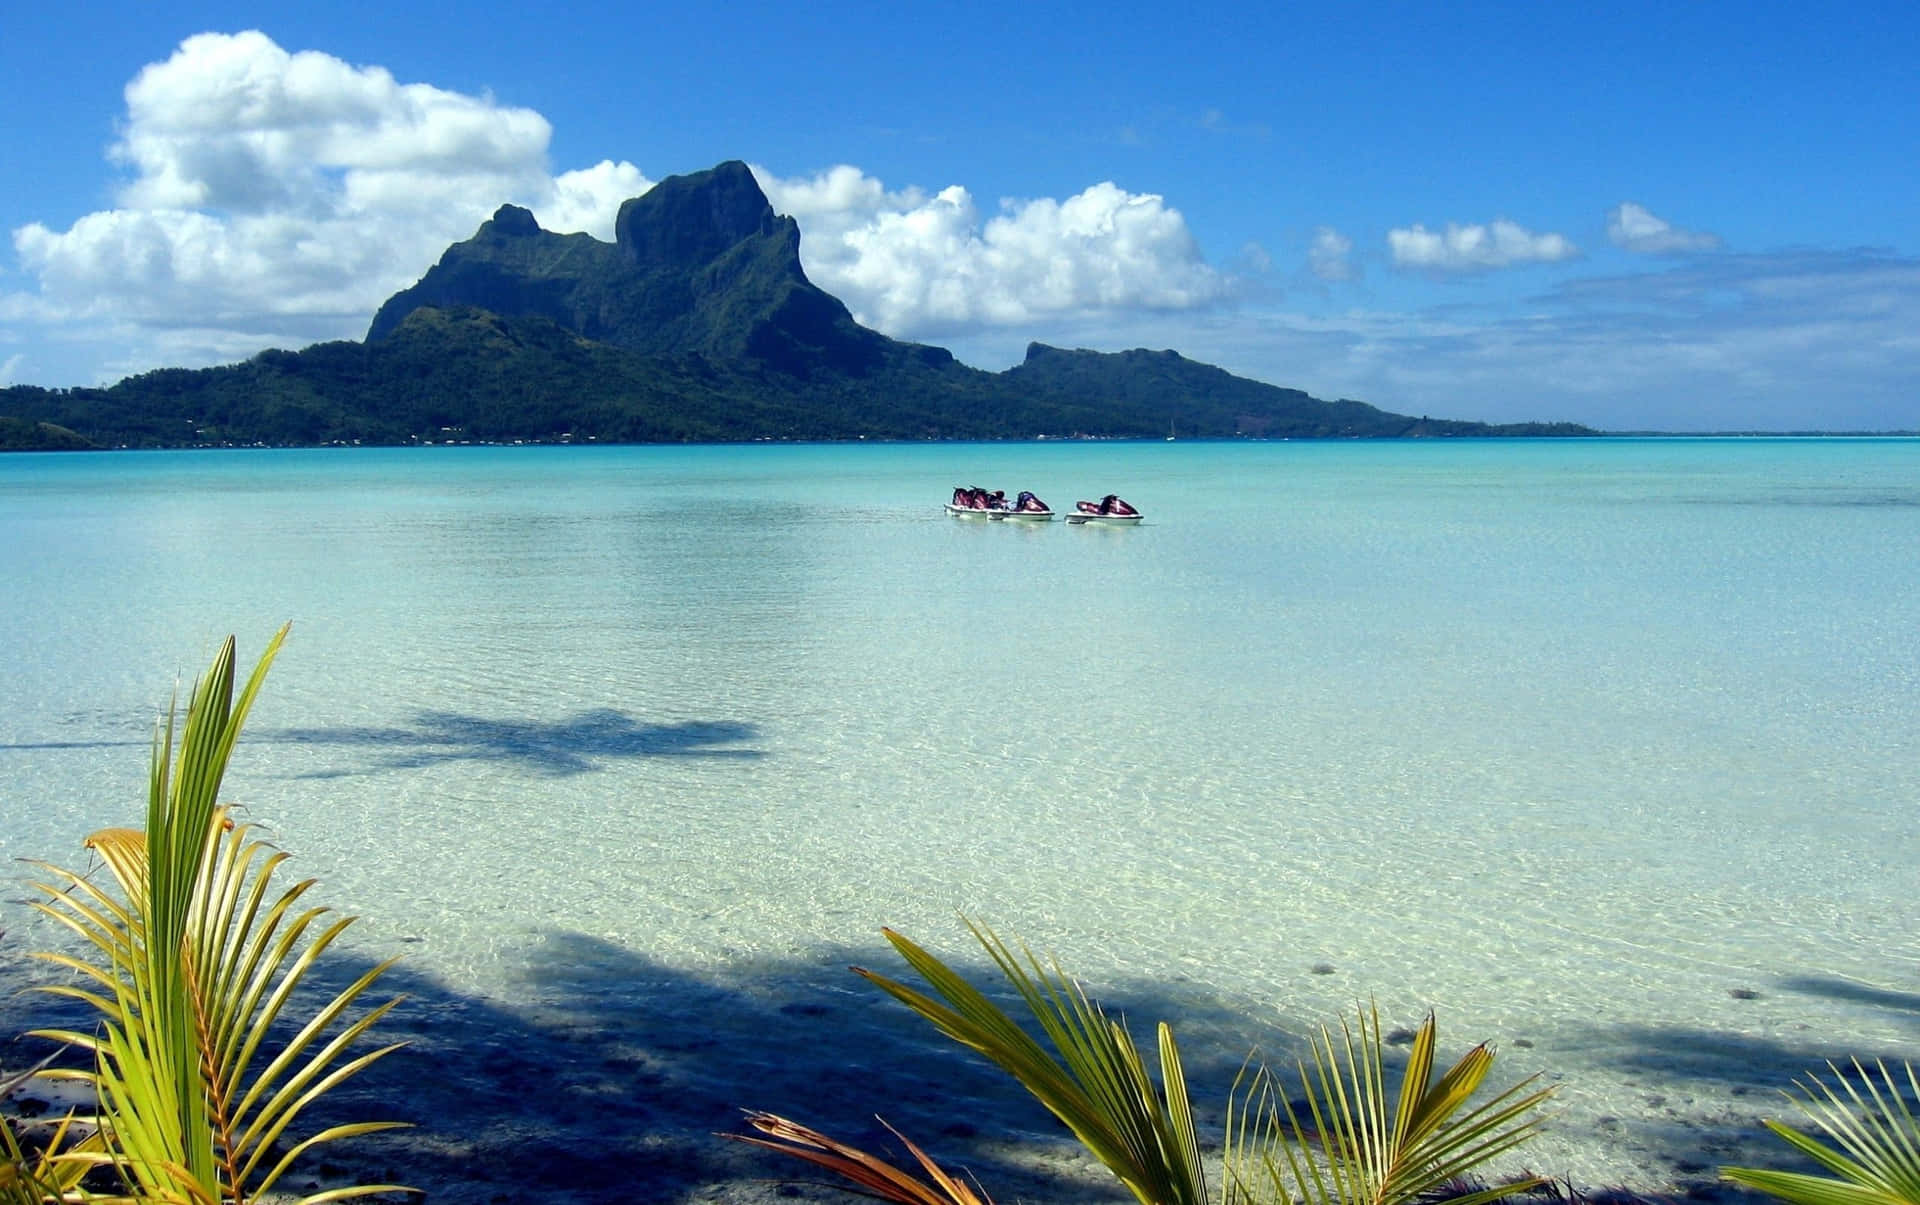 "Explore the Beauty of Bora Bora"